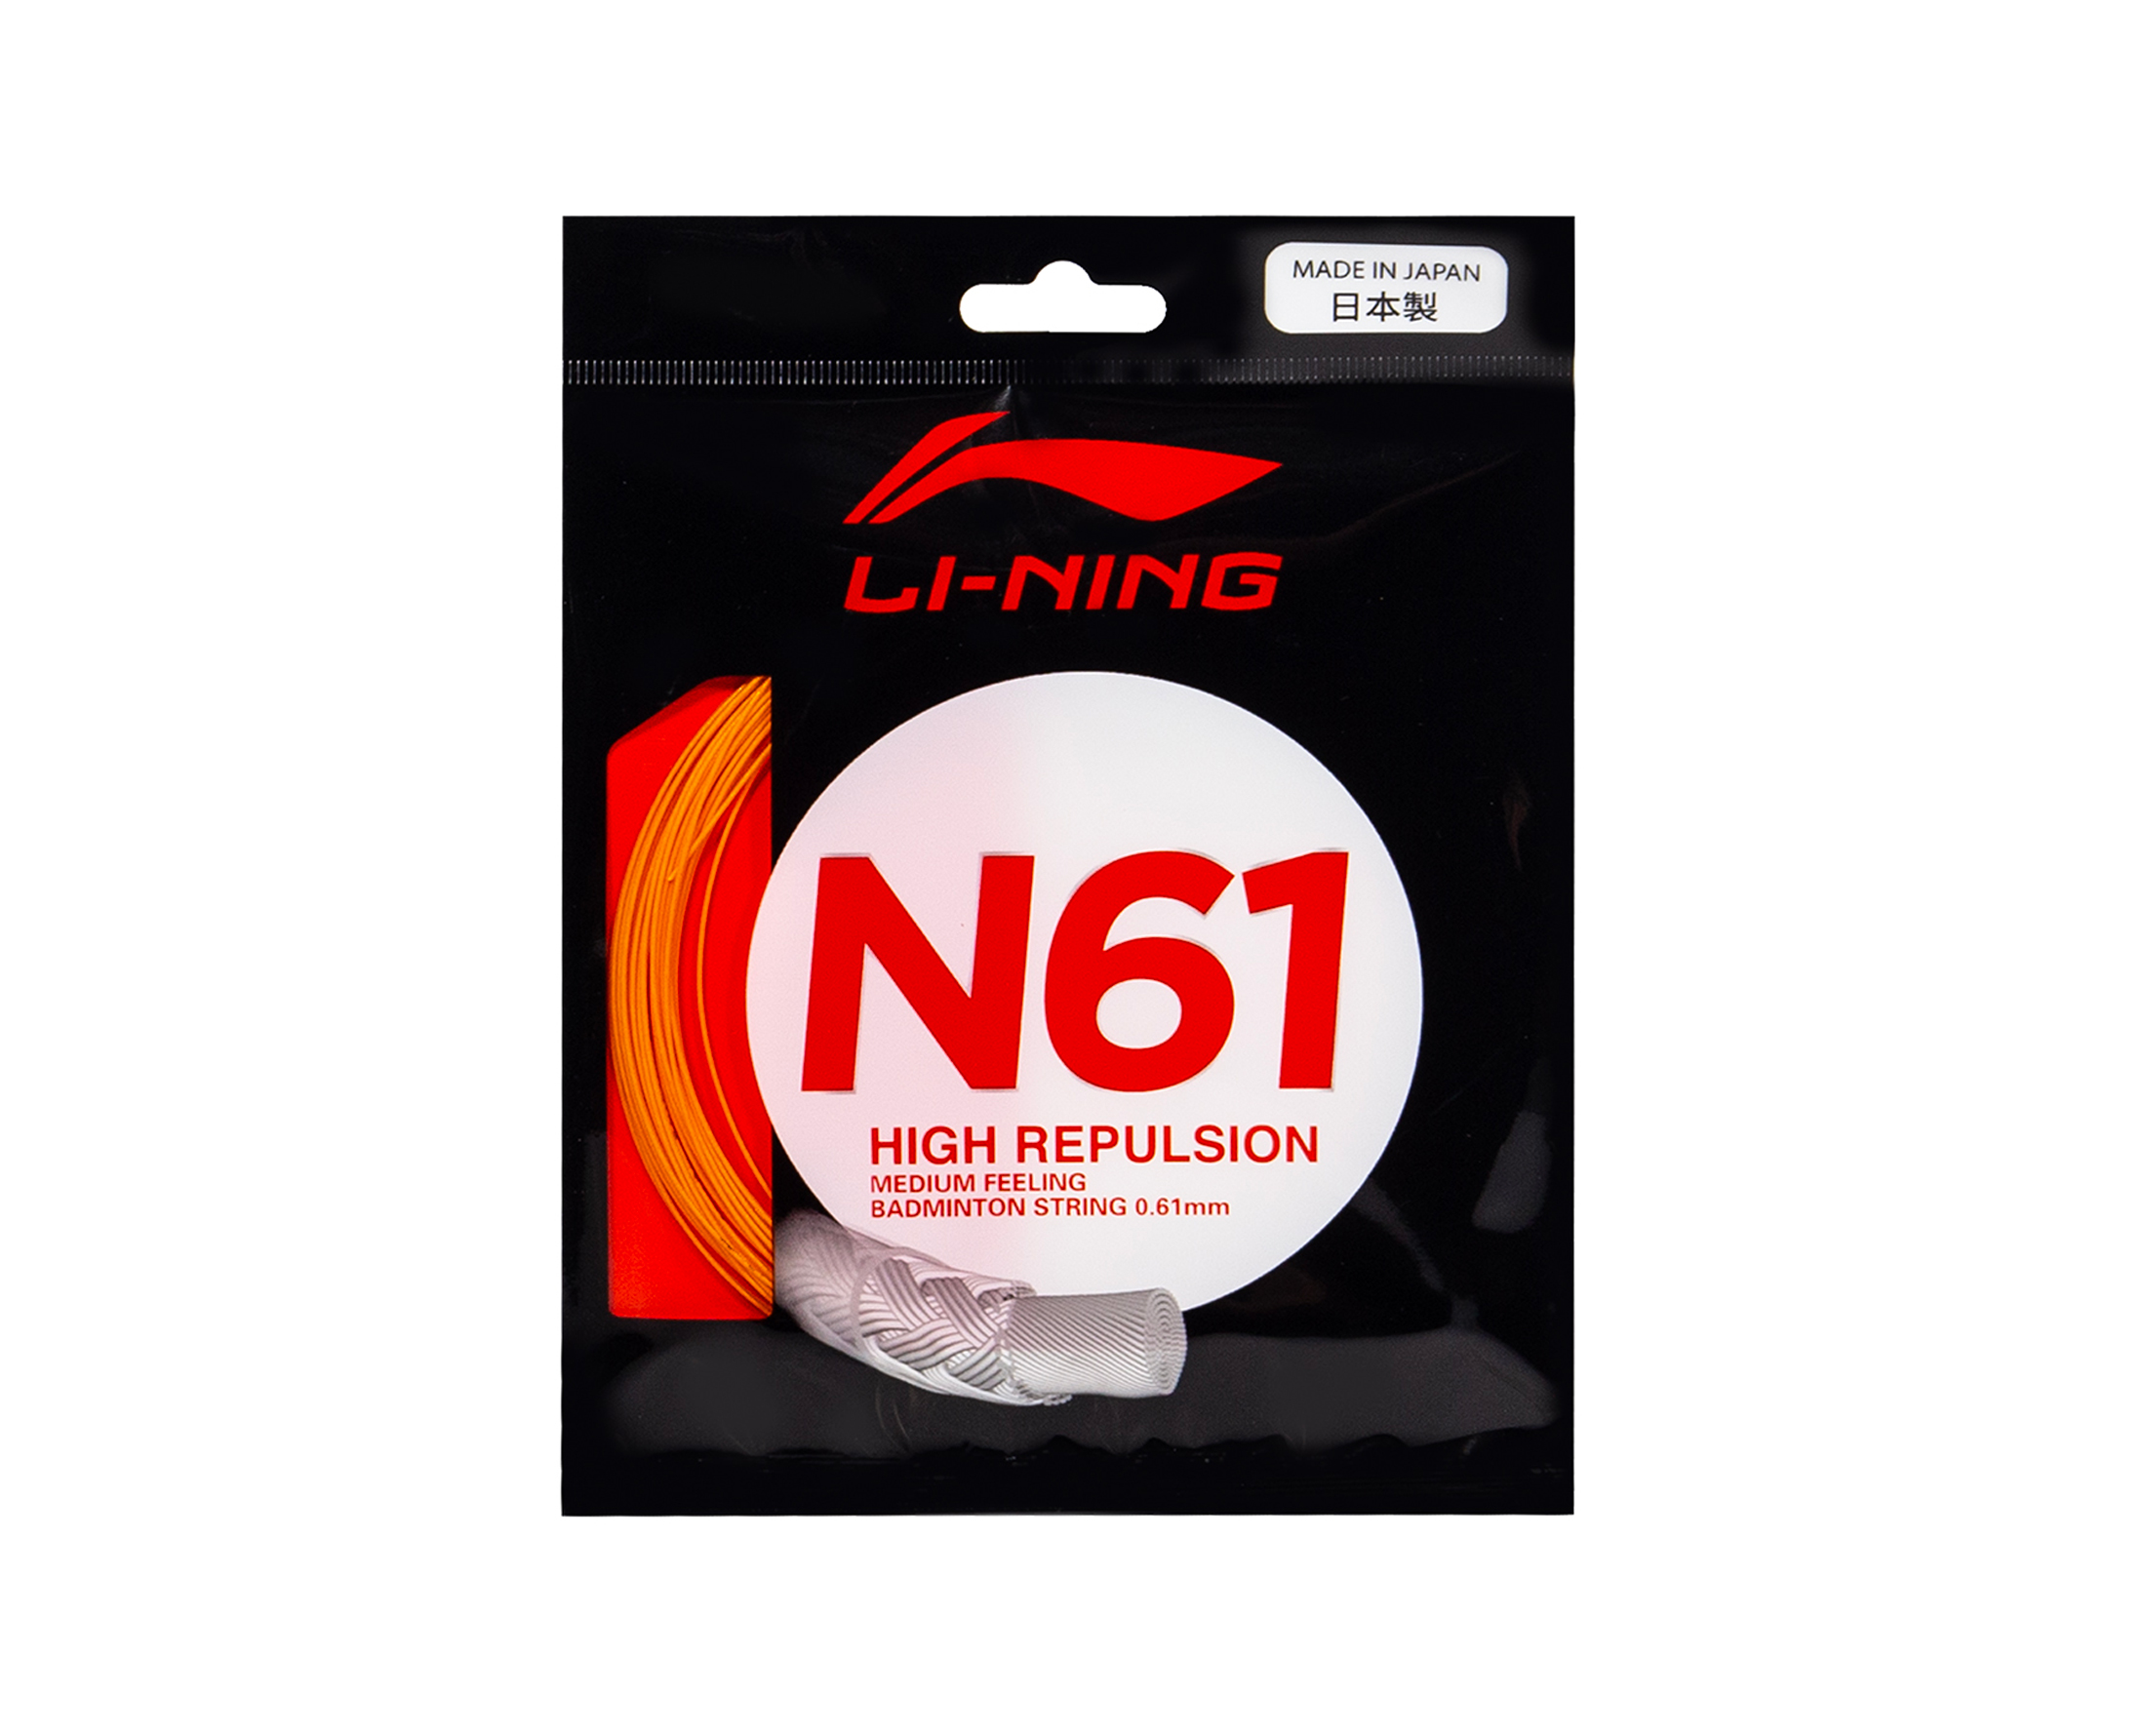 Badminton String N61 AXJS006-4- Li-Ning